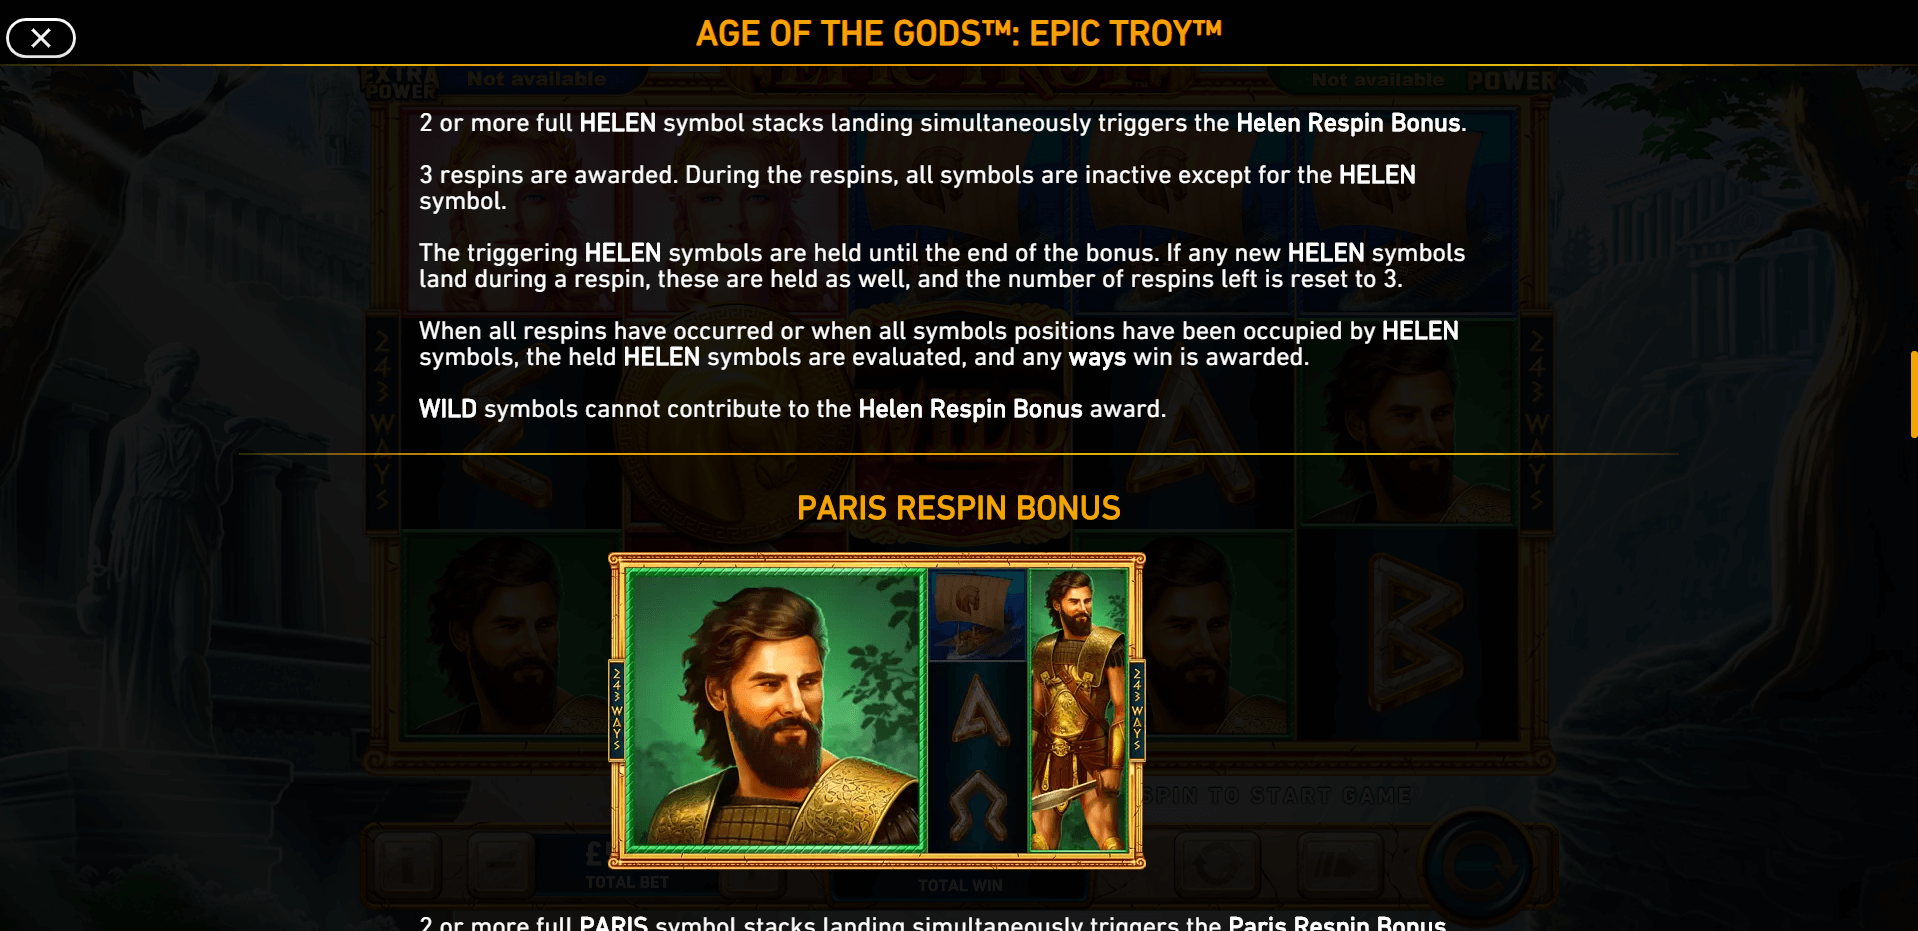 age of the gods epic troy slot machine detail image 4